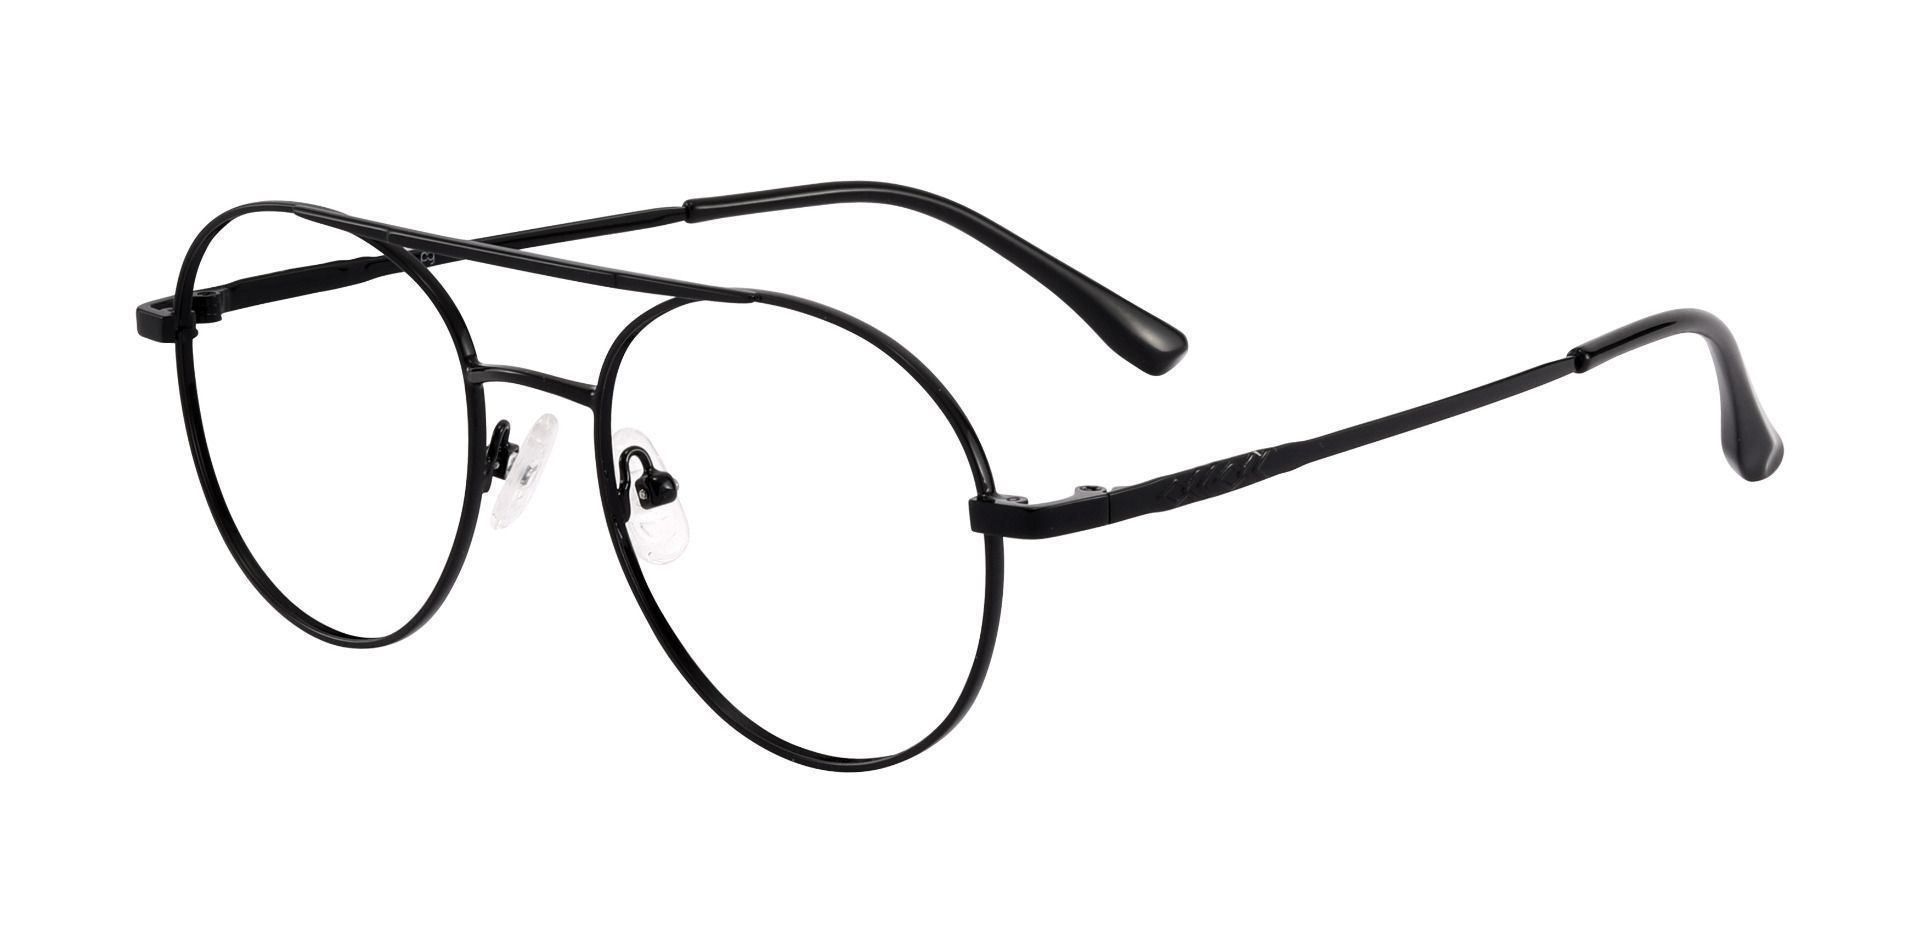 Cresson Aviator Lined Bifocal Glasses - Black